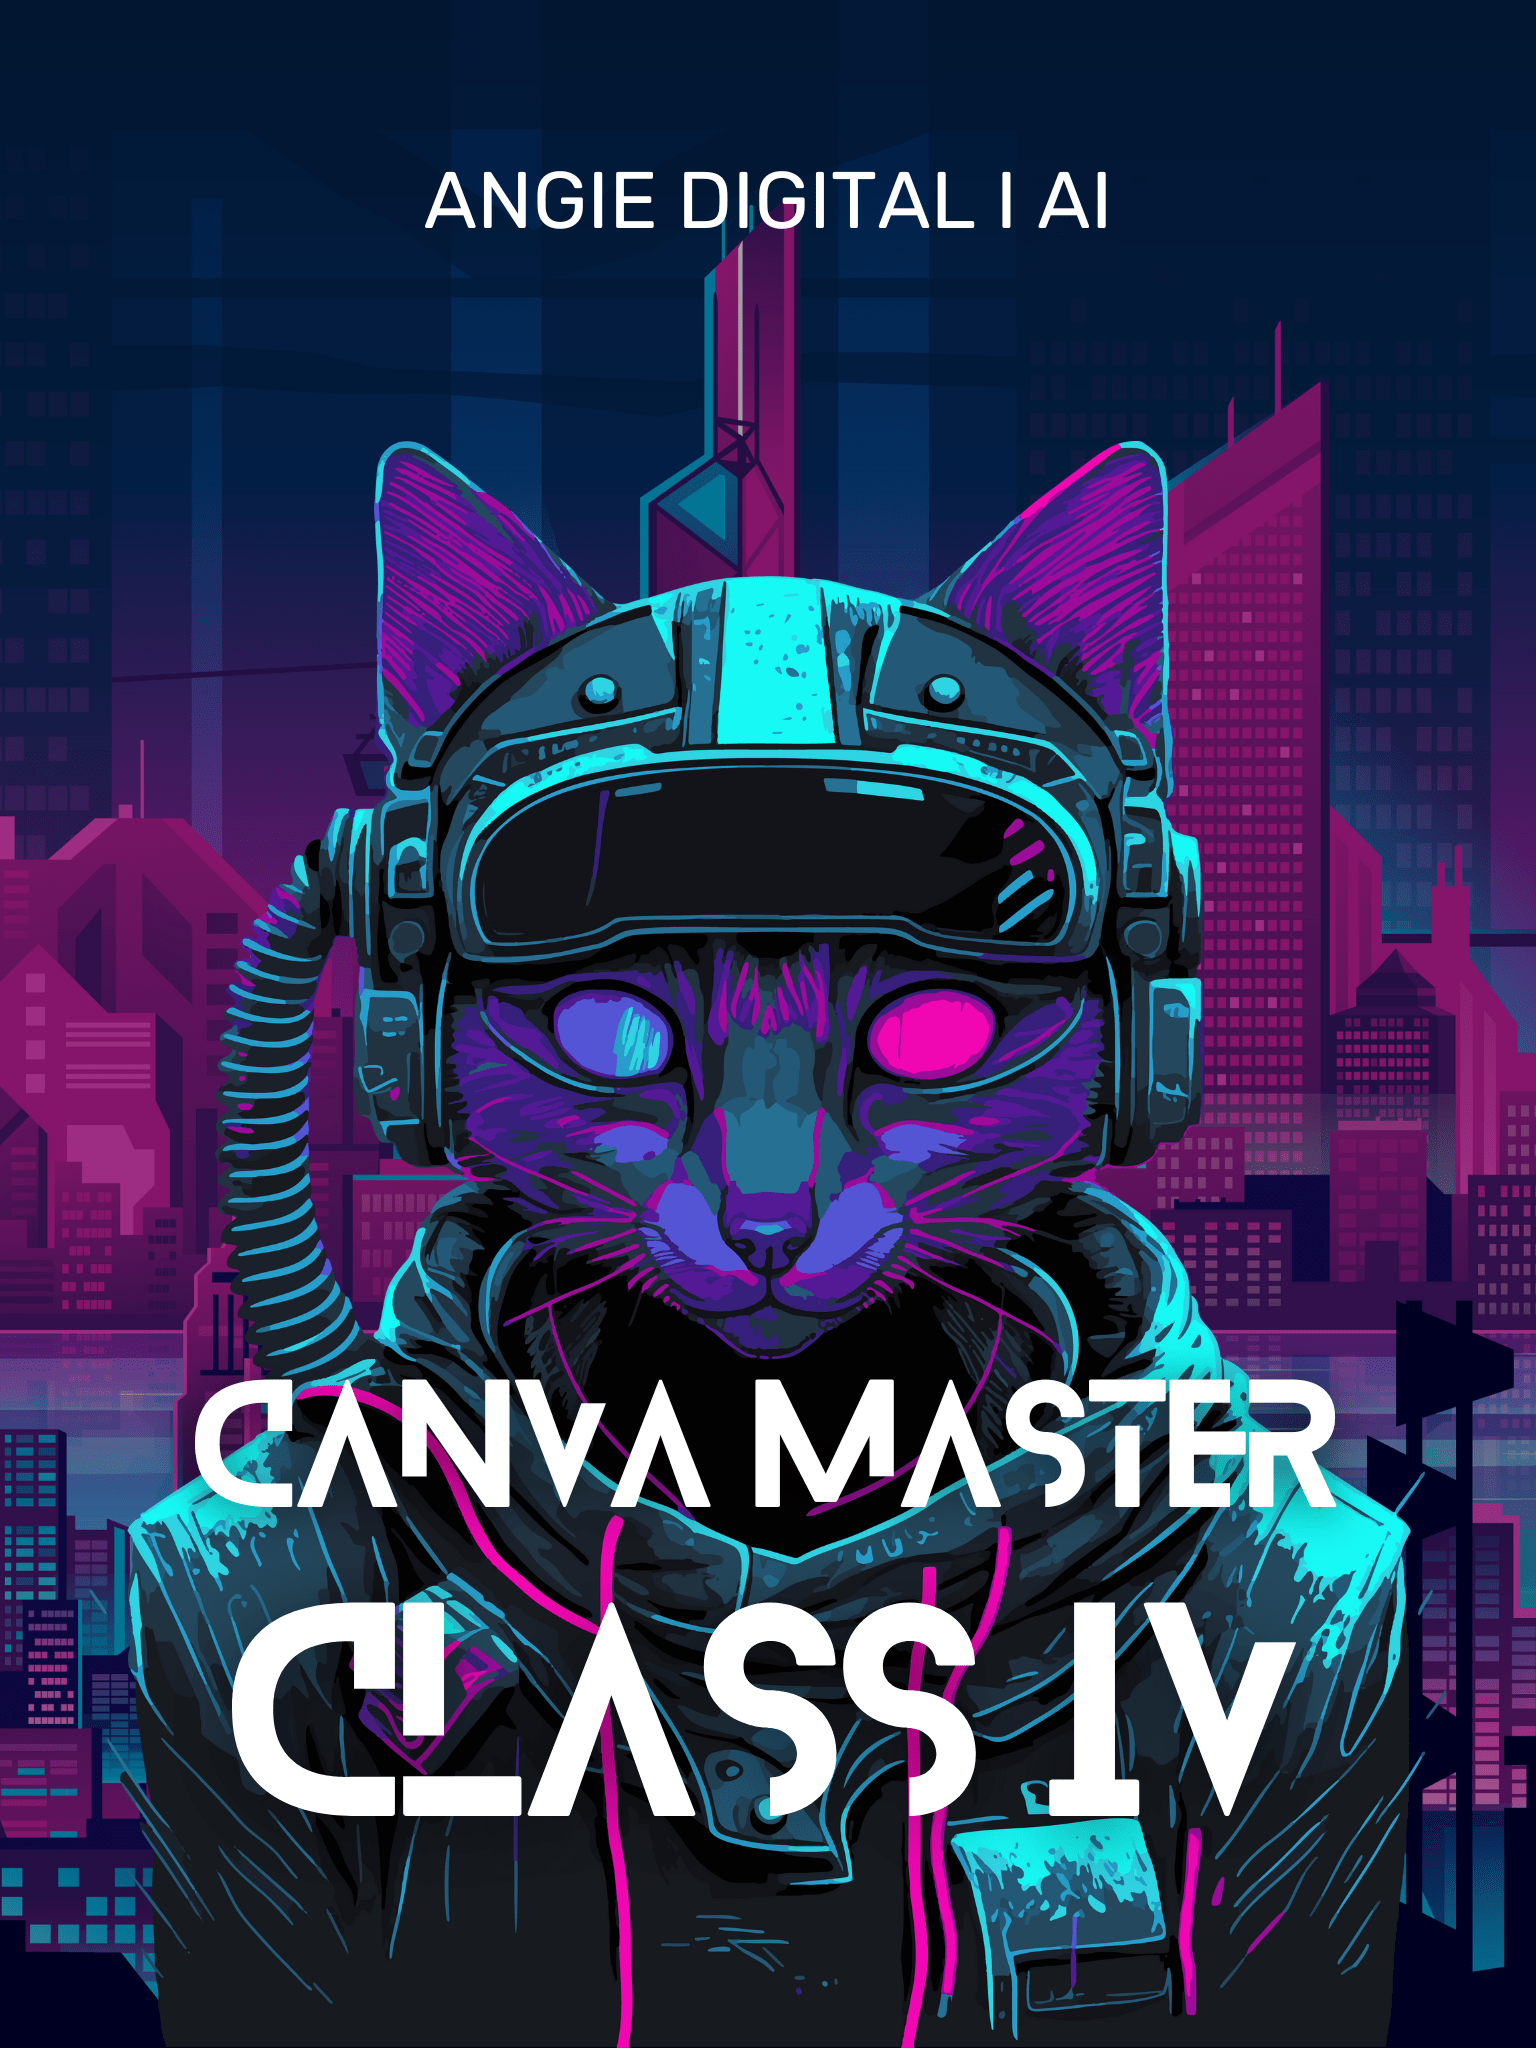 CANVA MASTER CLASS III Angie Digital